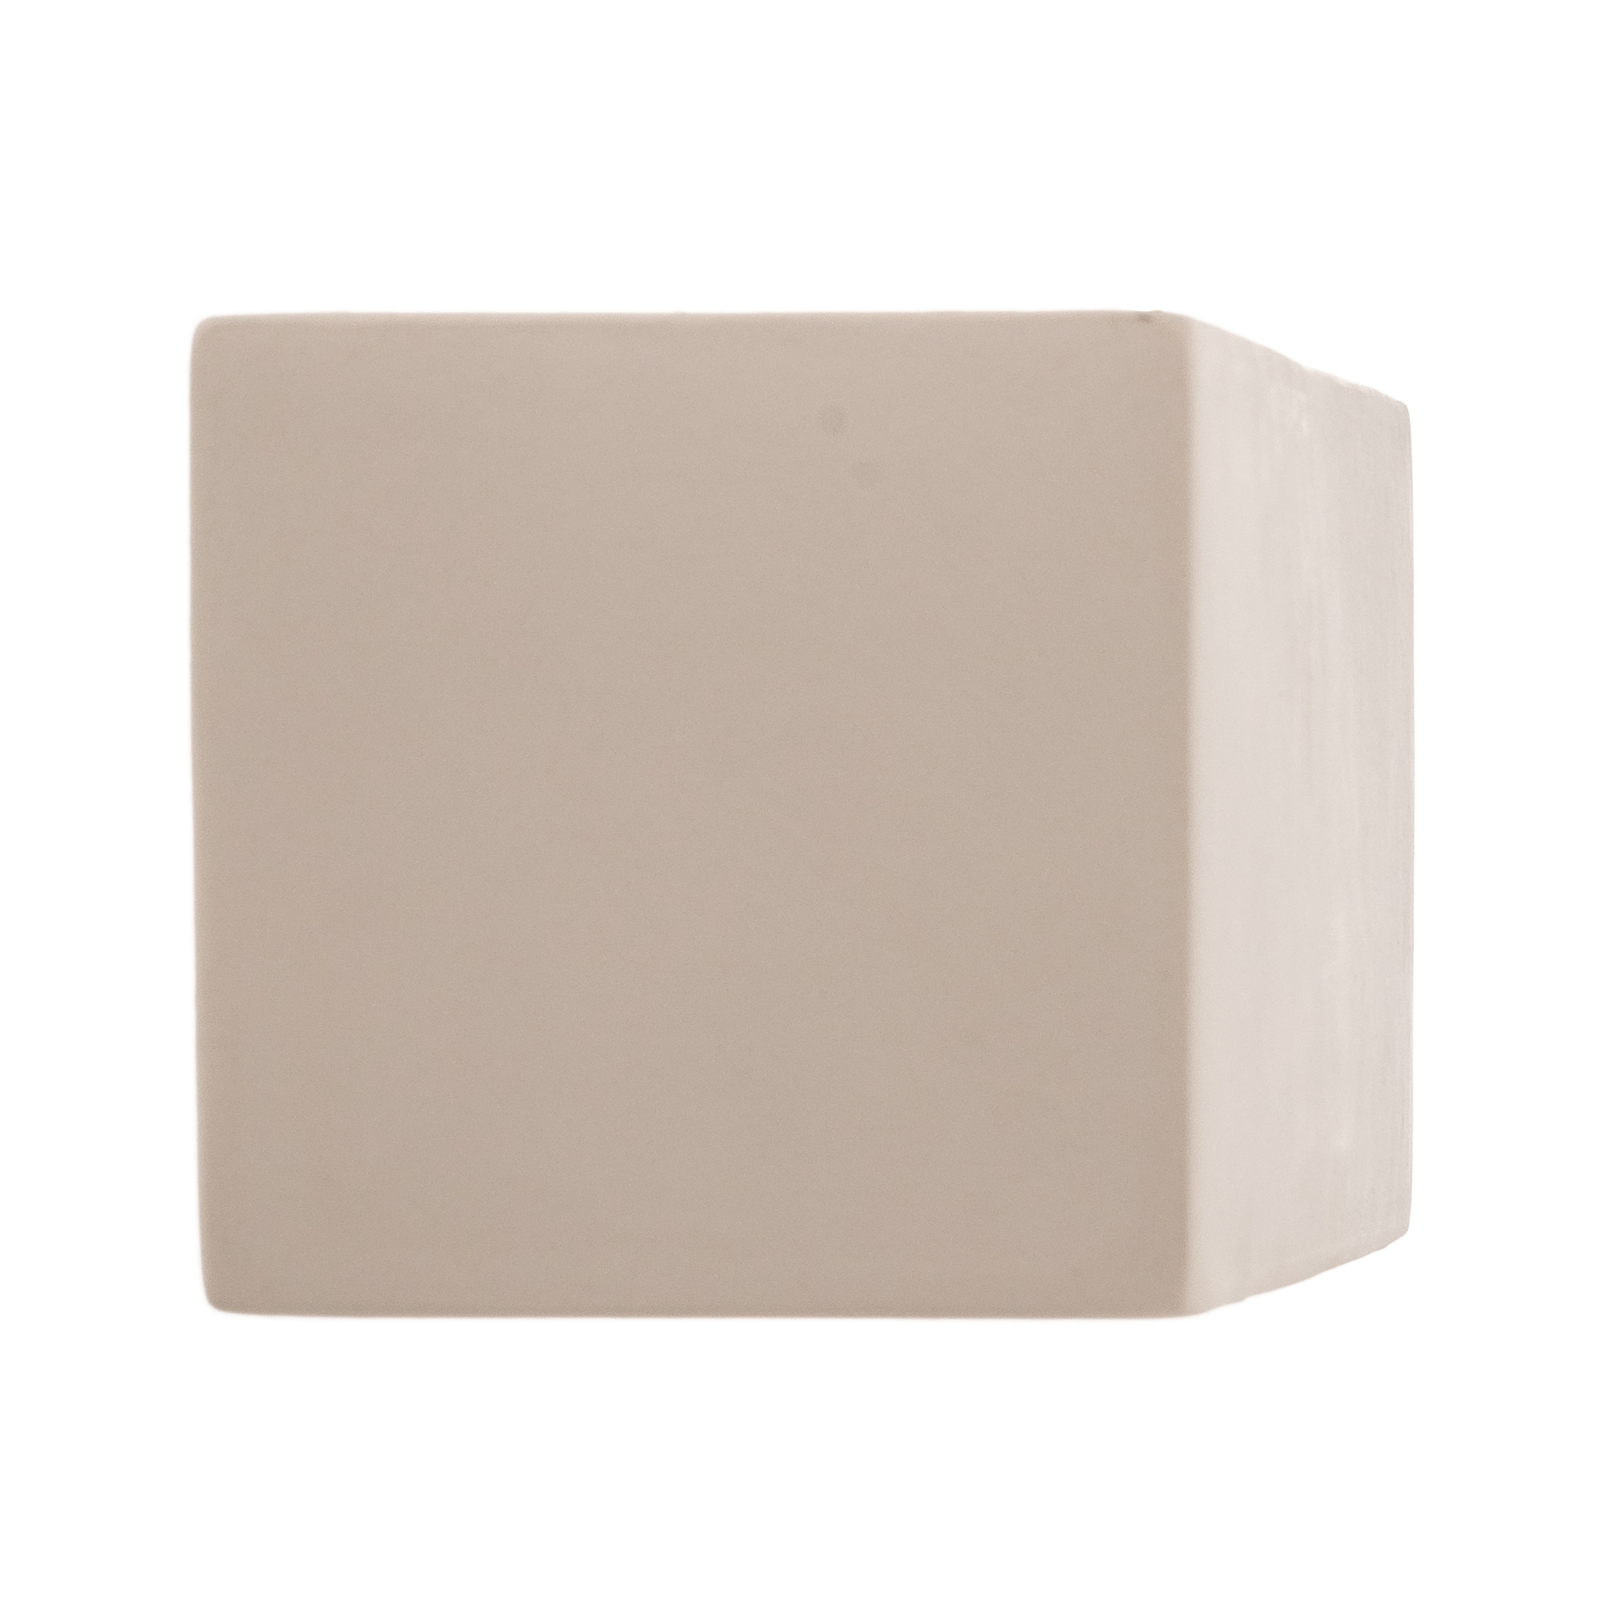 Wandlampe Cube Line up/down aus Keramik, weiß